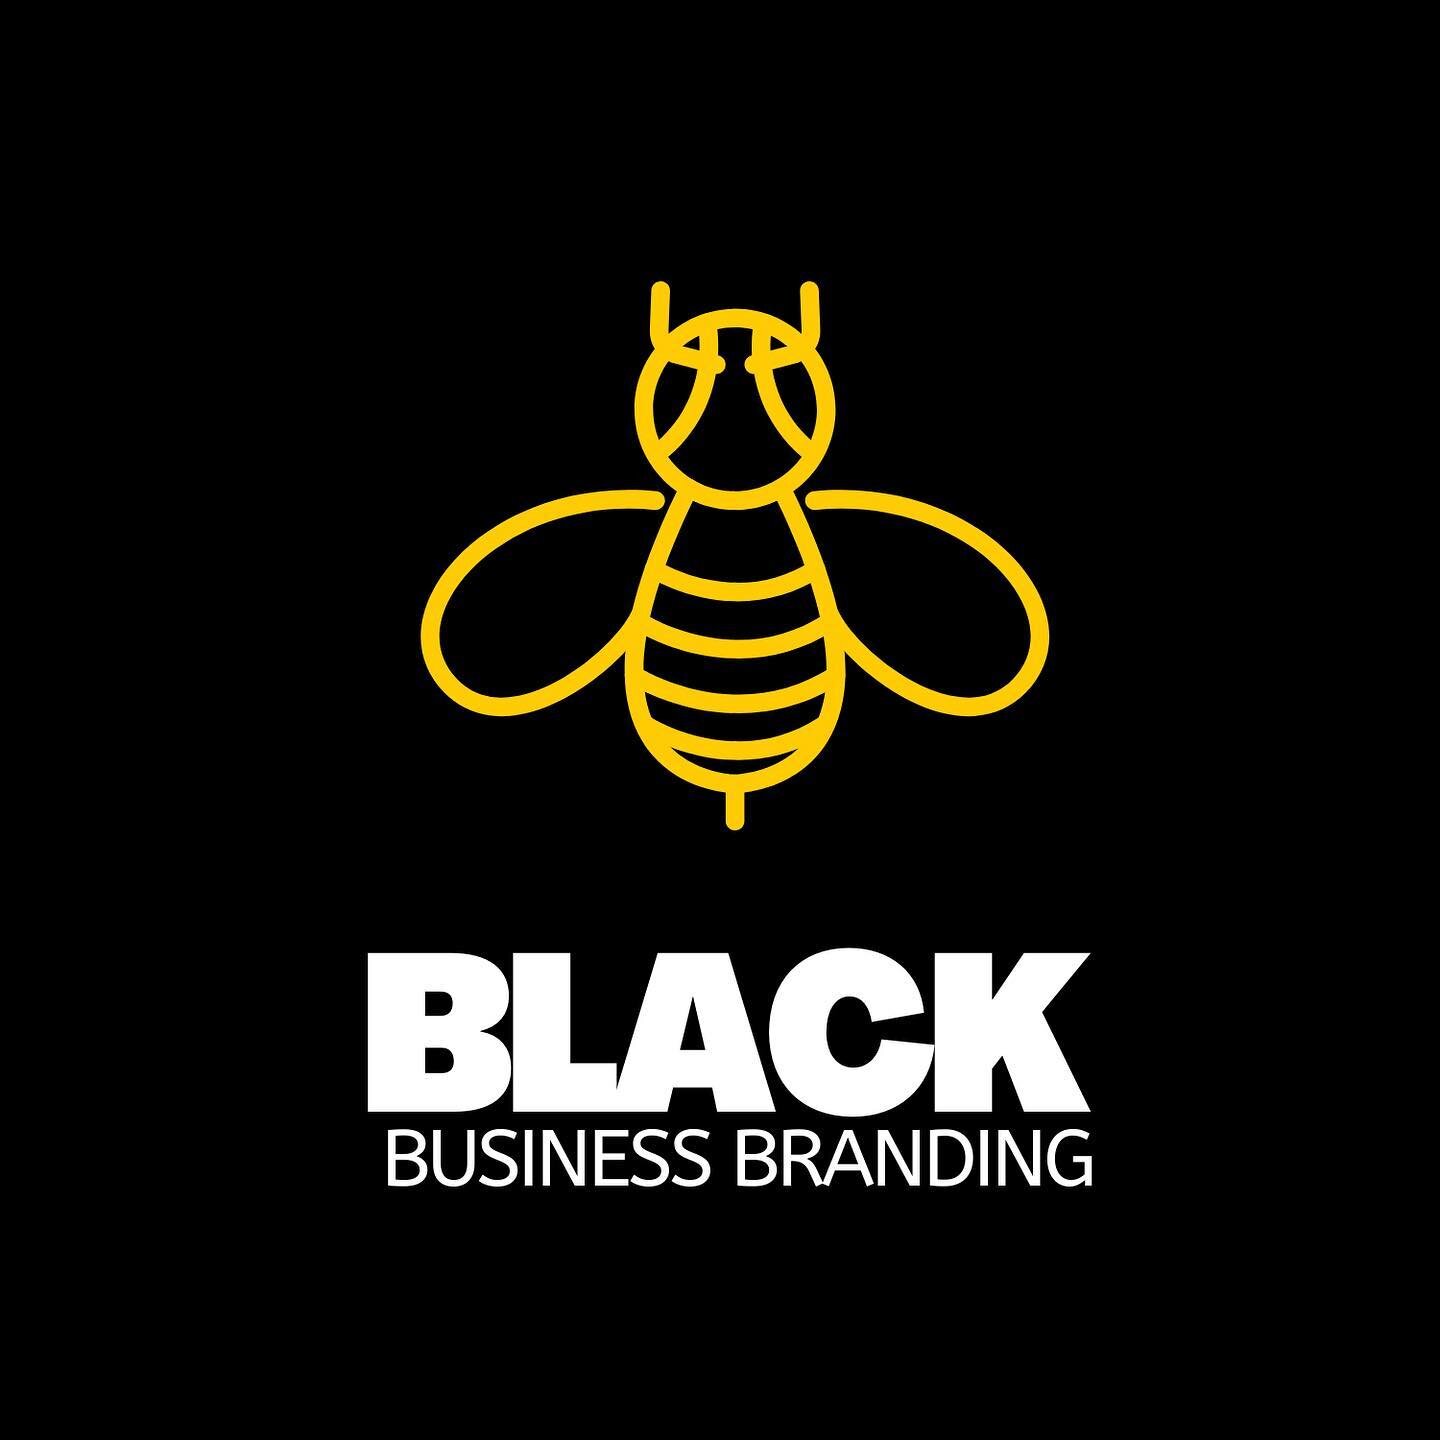 Visually Branding Black Businesses all 2020 and Beyond!
.
.
.
#blackownedbusiness #bob #blackphotographers #blackvideographer #blackgraphicdesigner #urbanprofessionals #brooklynphotographer #newyorkphotographers #headshots #promoshots